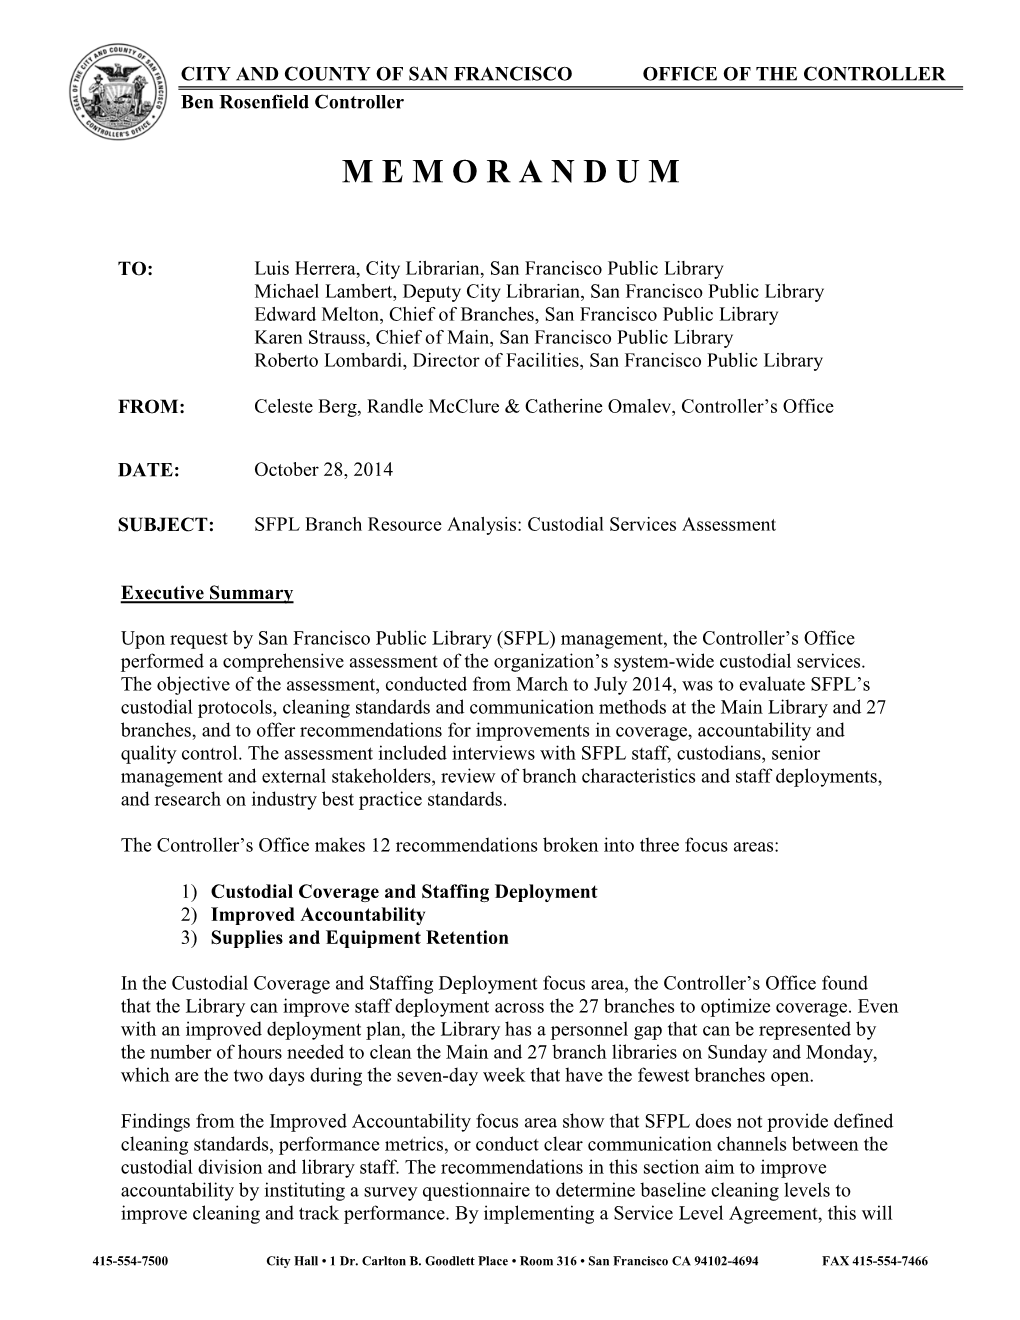 Custodial Services Memorandum: October 28, 2014